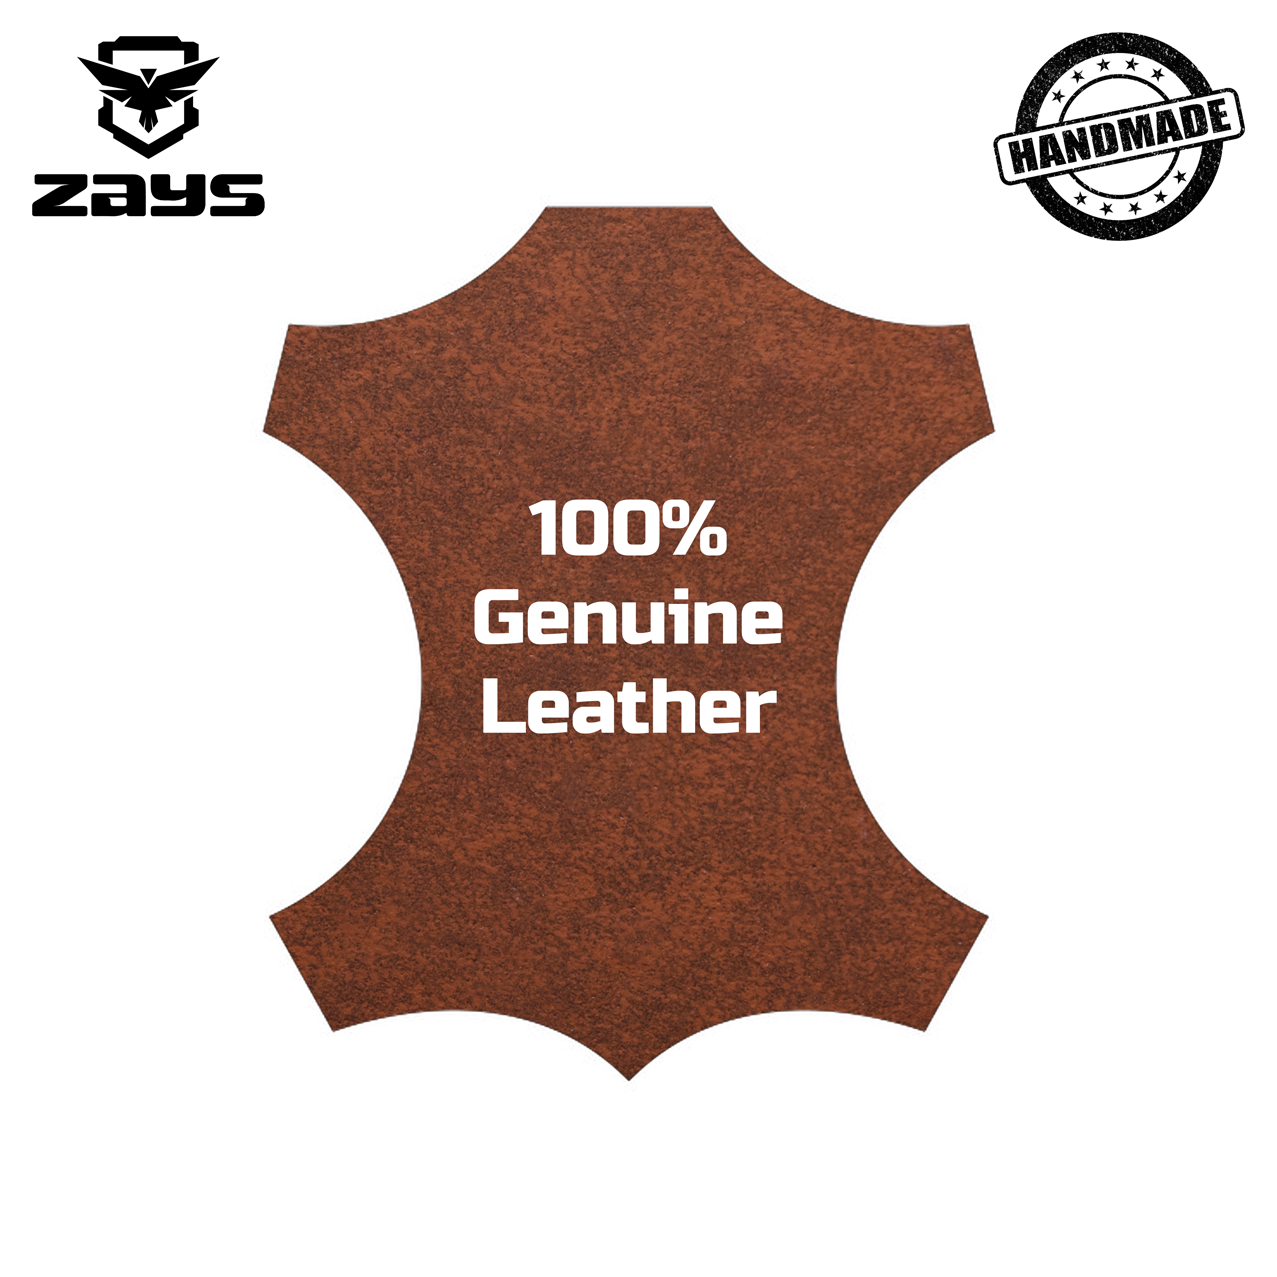 Zays Leather Long Wallet for Men - ZAYSWL03